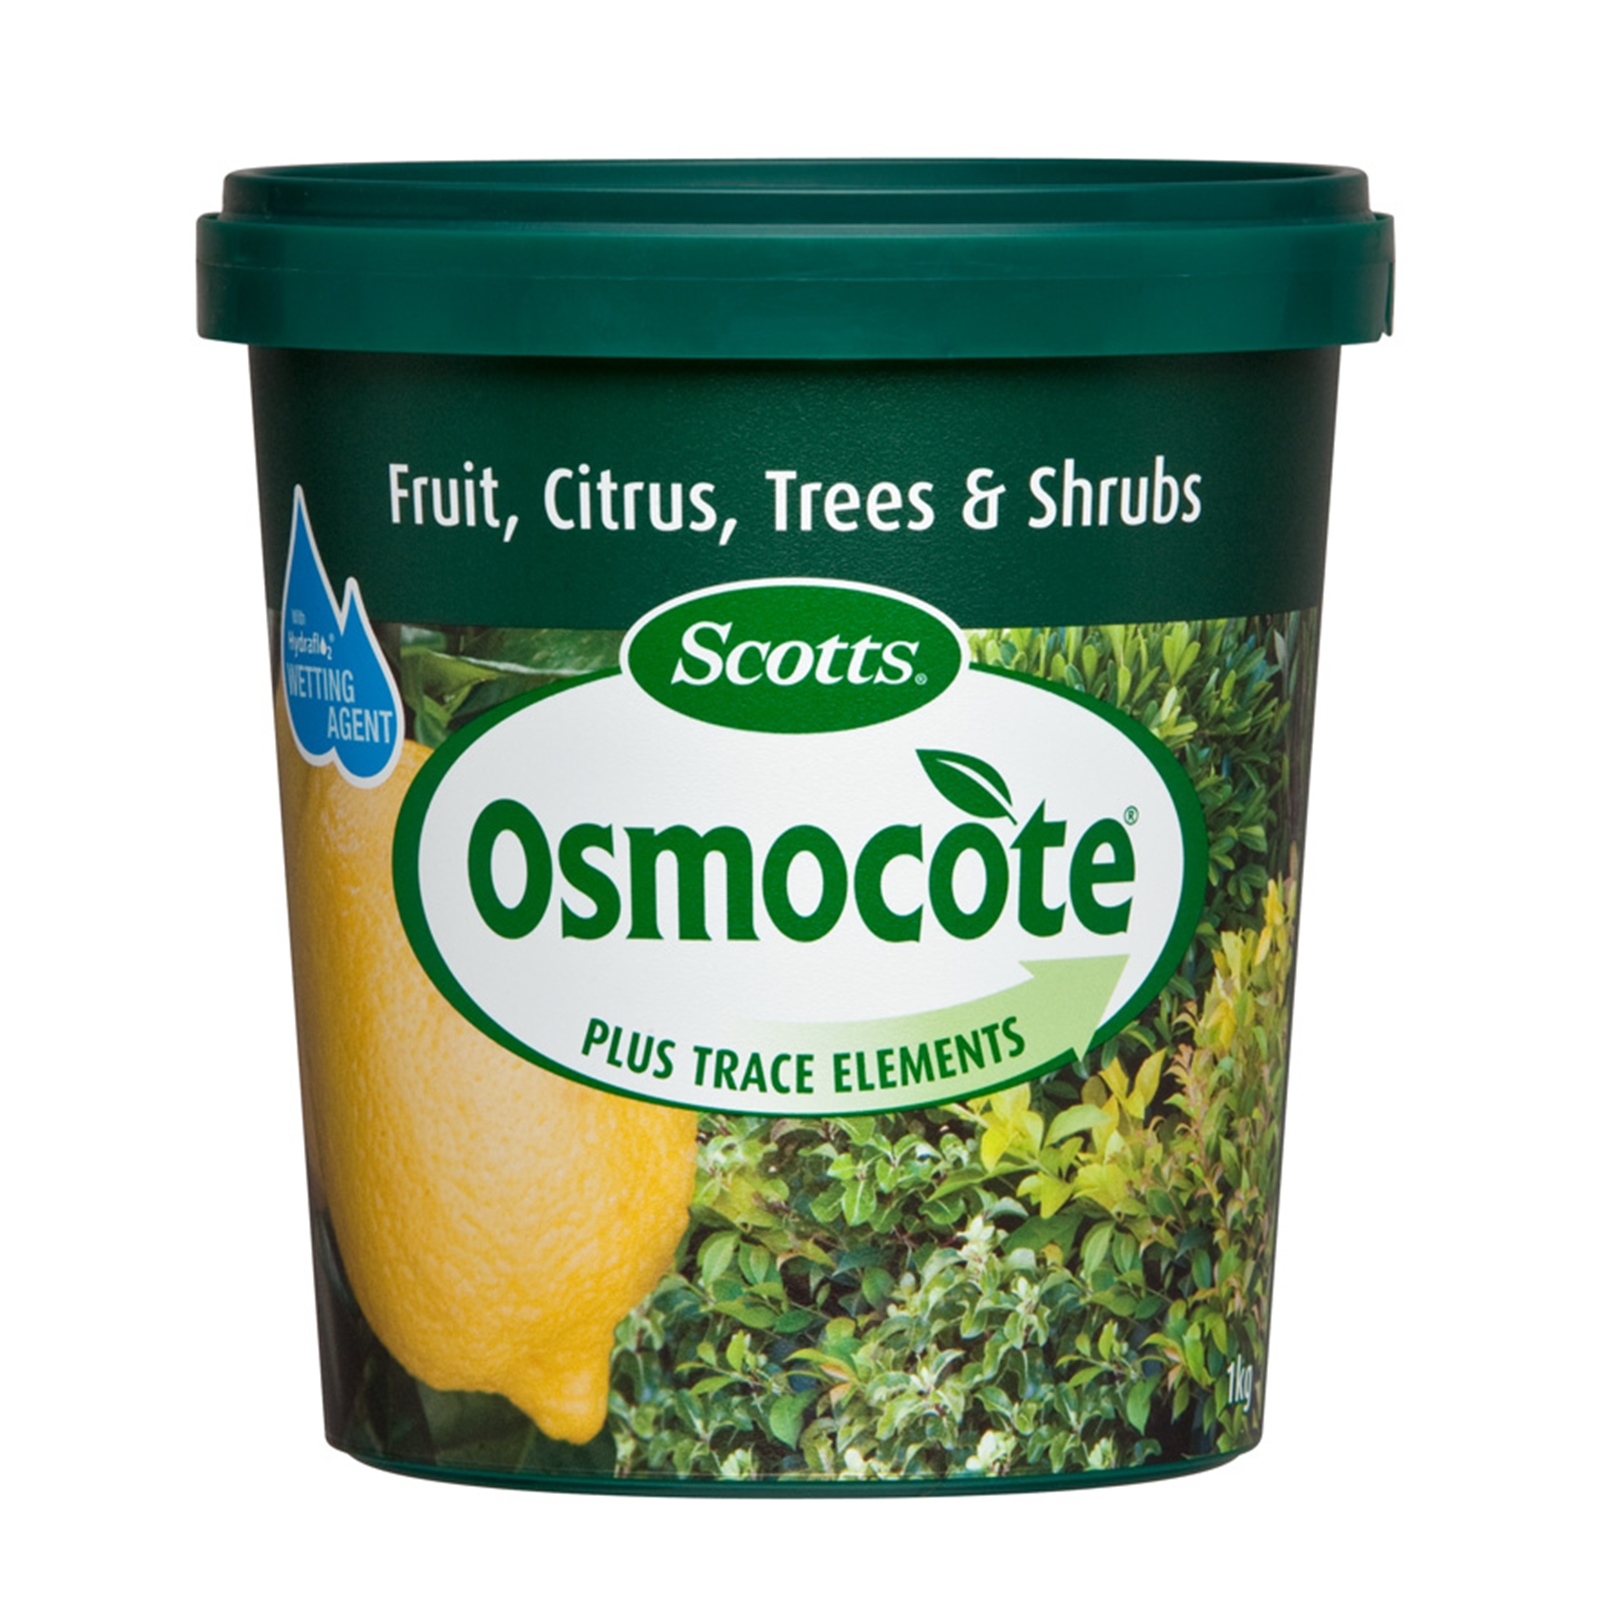 Osmocote 1kg Fruit Citrus Trees And Shrubs Controlled Release Fertiliser